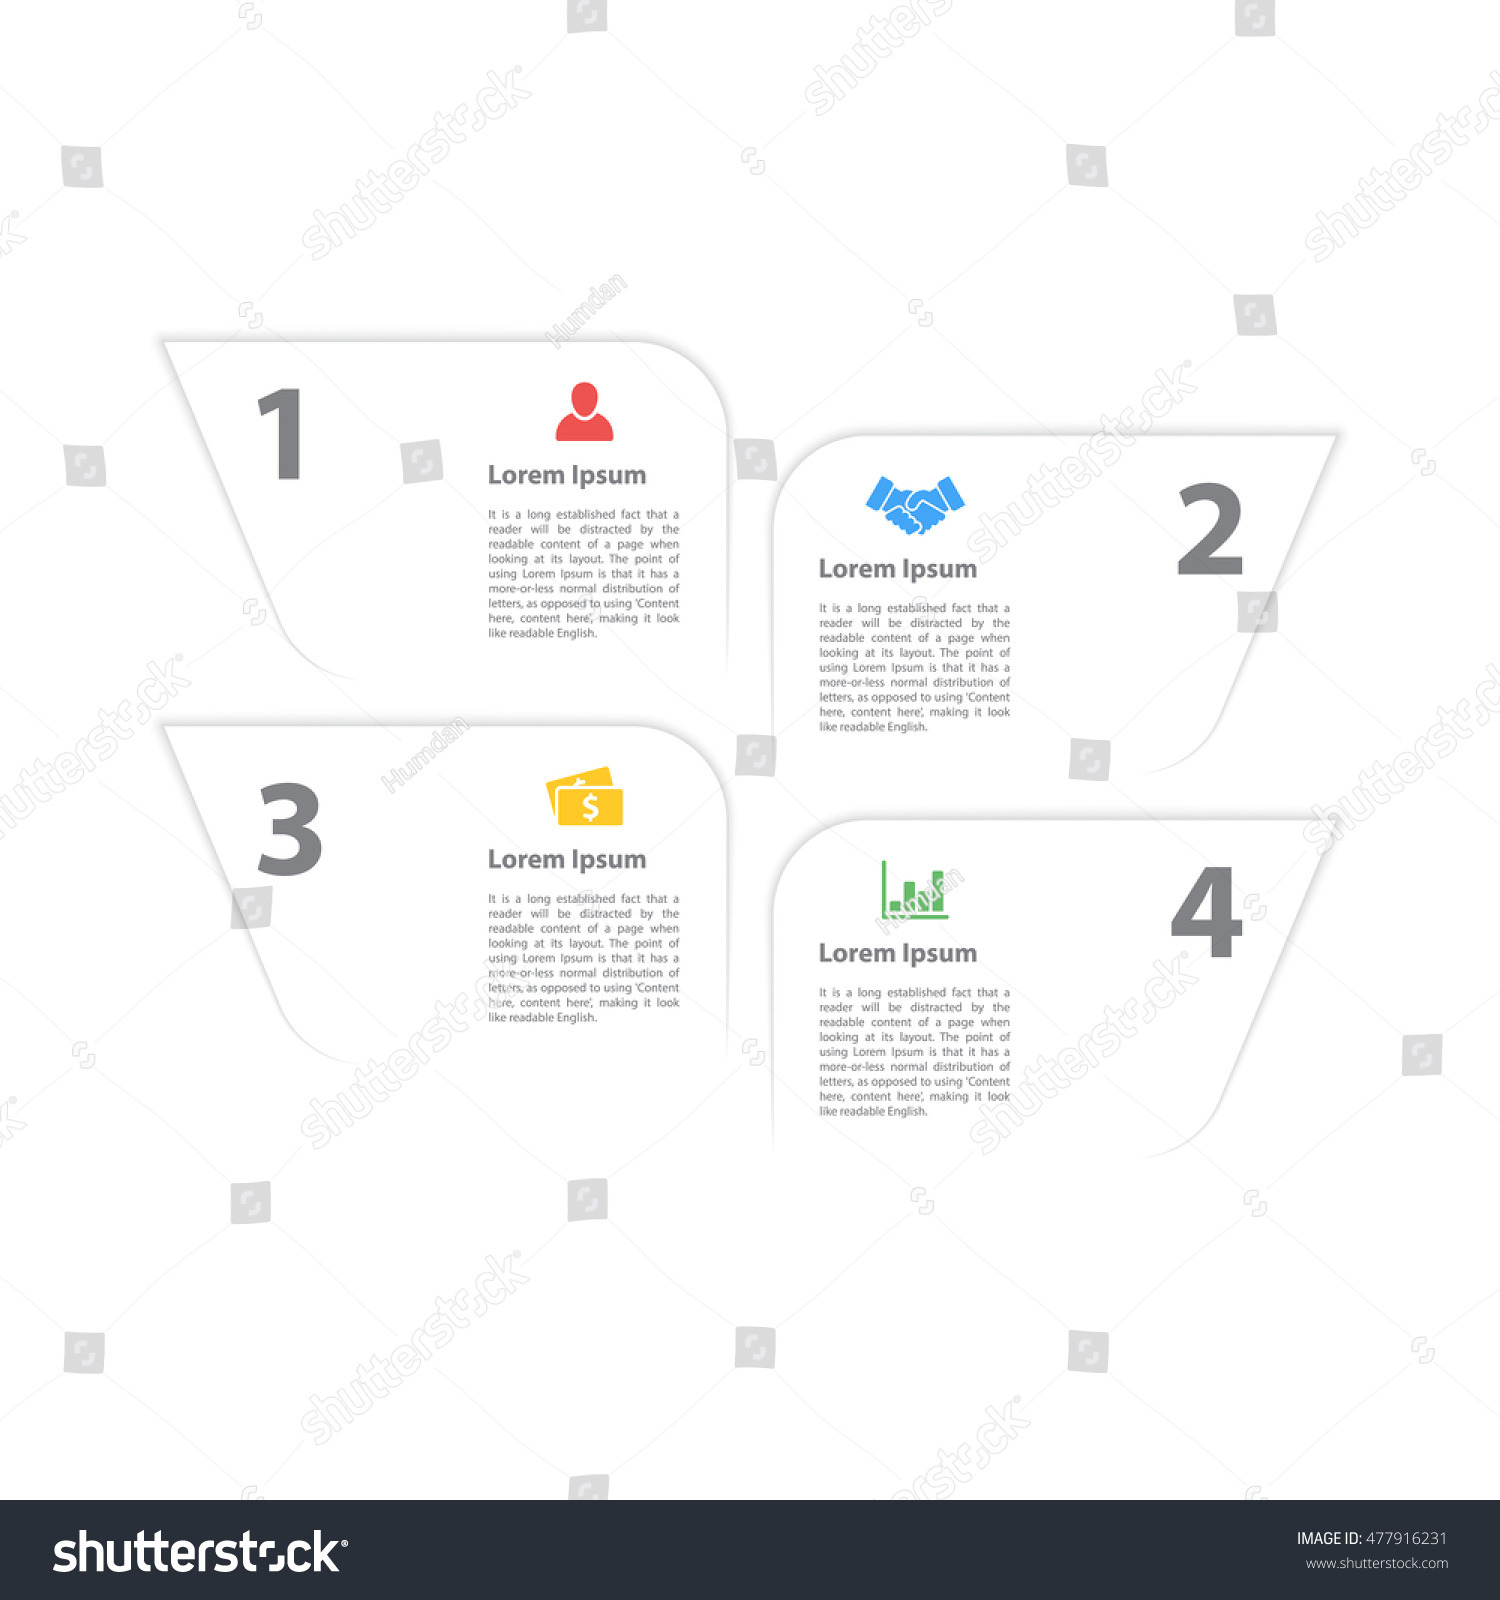 Four Steps Sequence Infographic Layout Concept เวกเตอร์สต็อก ปลอดค่าลิขสิทธิ์ 477916231 0669